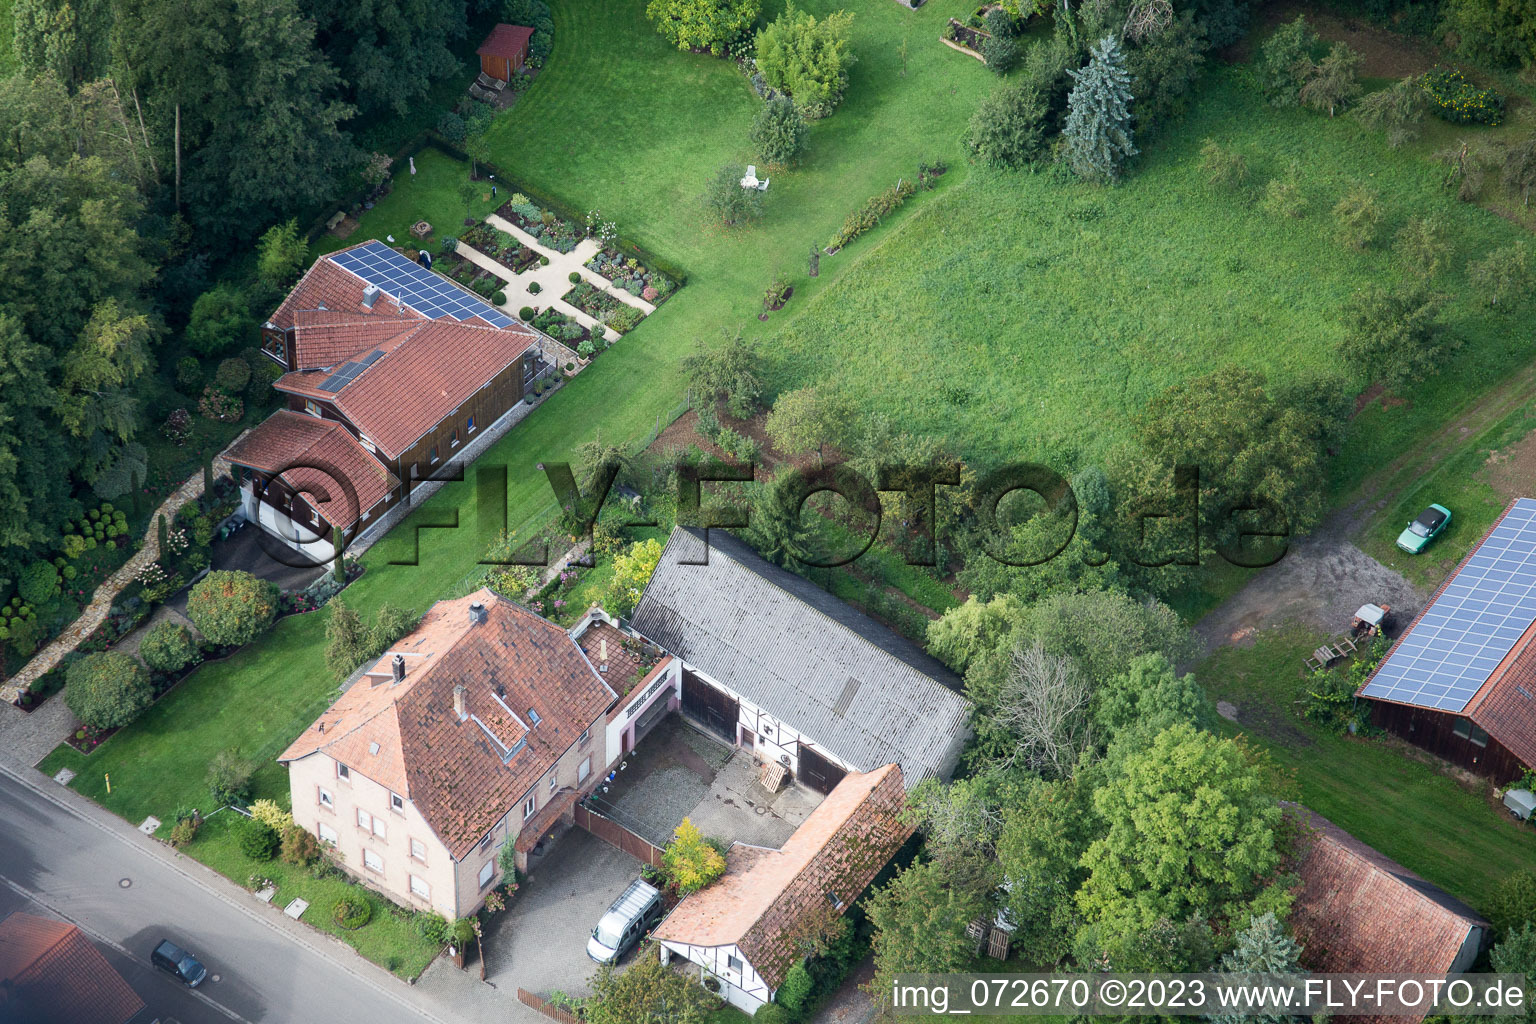 District Klingen in Heuchelheim-Klingen in the state Rhineland-Palatinate, Germany seen from a drone